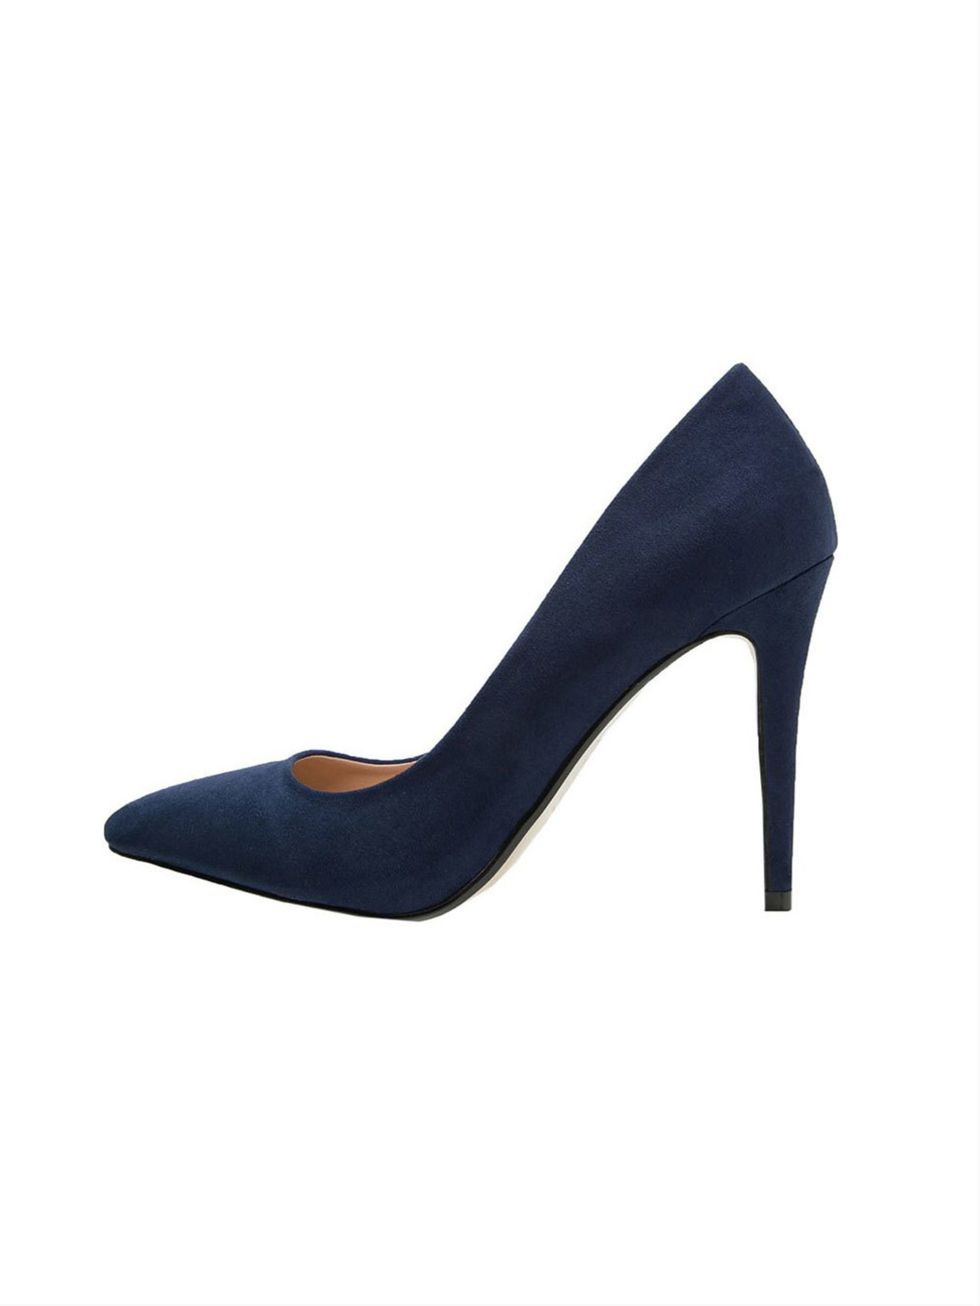 High heels, Grey, Tan, Beige, Basic pump, Court shoe, Foot, Synthetic rubber, 